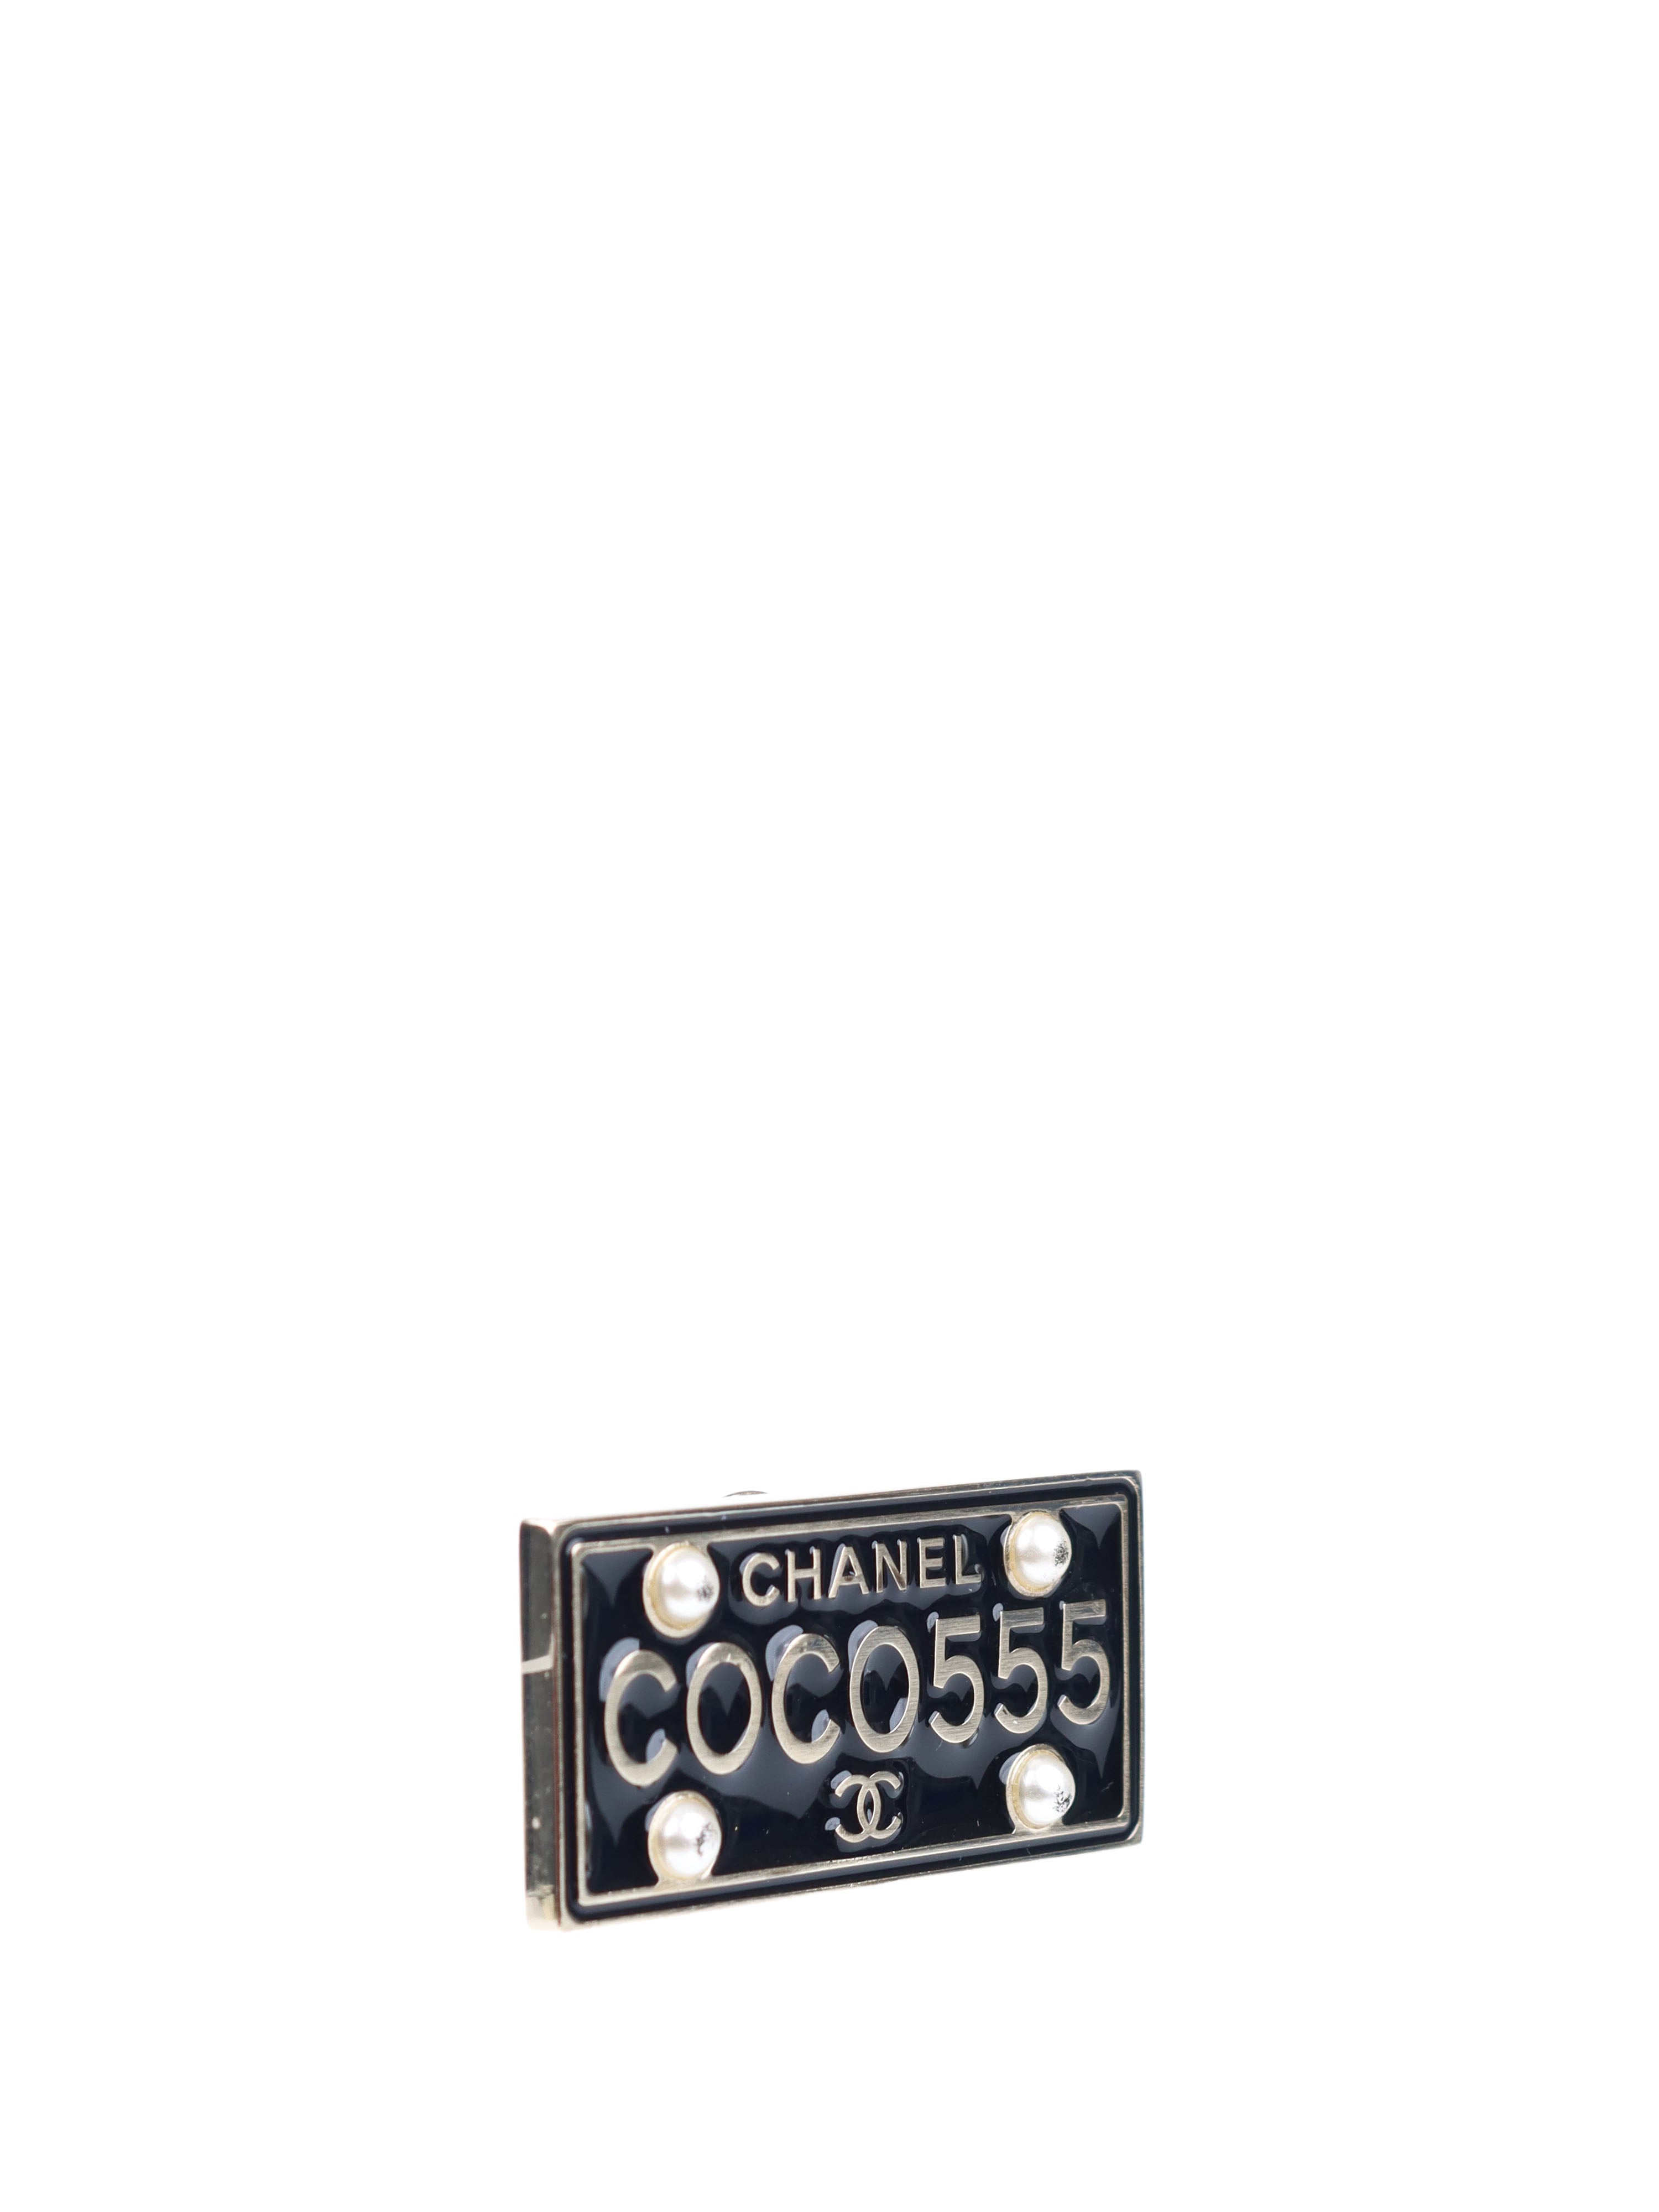 ChanelCoco555Brooch-2.jpg